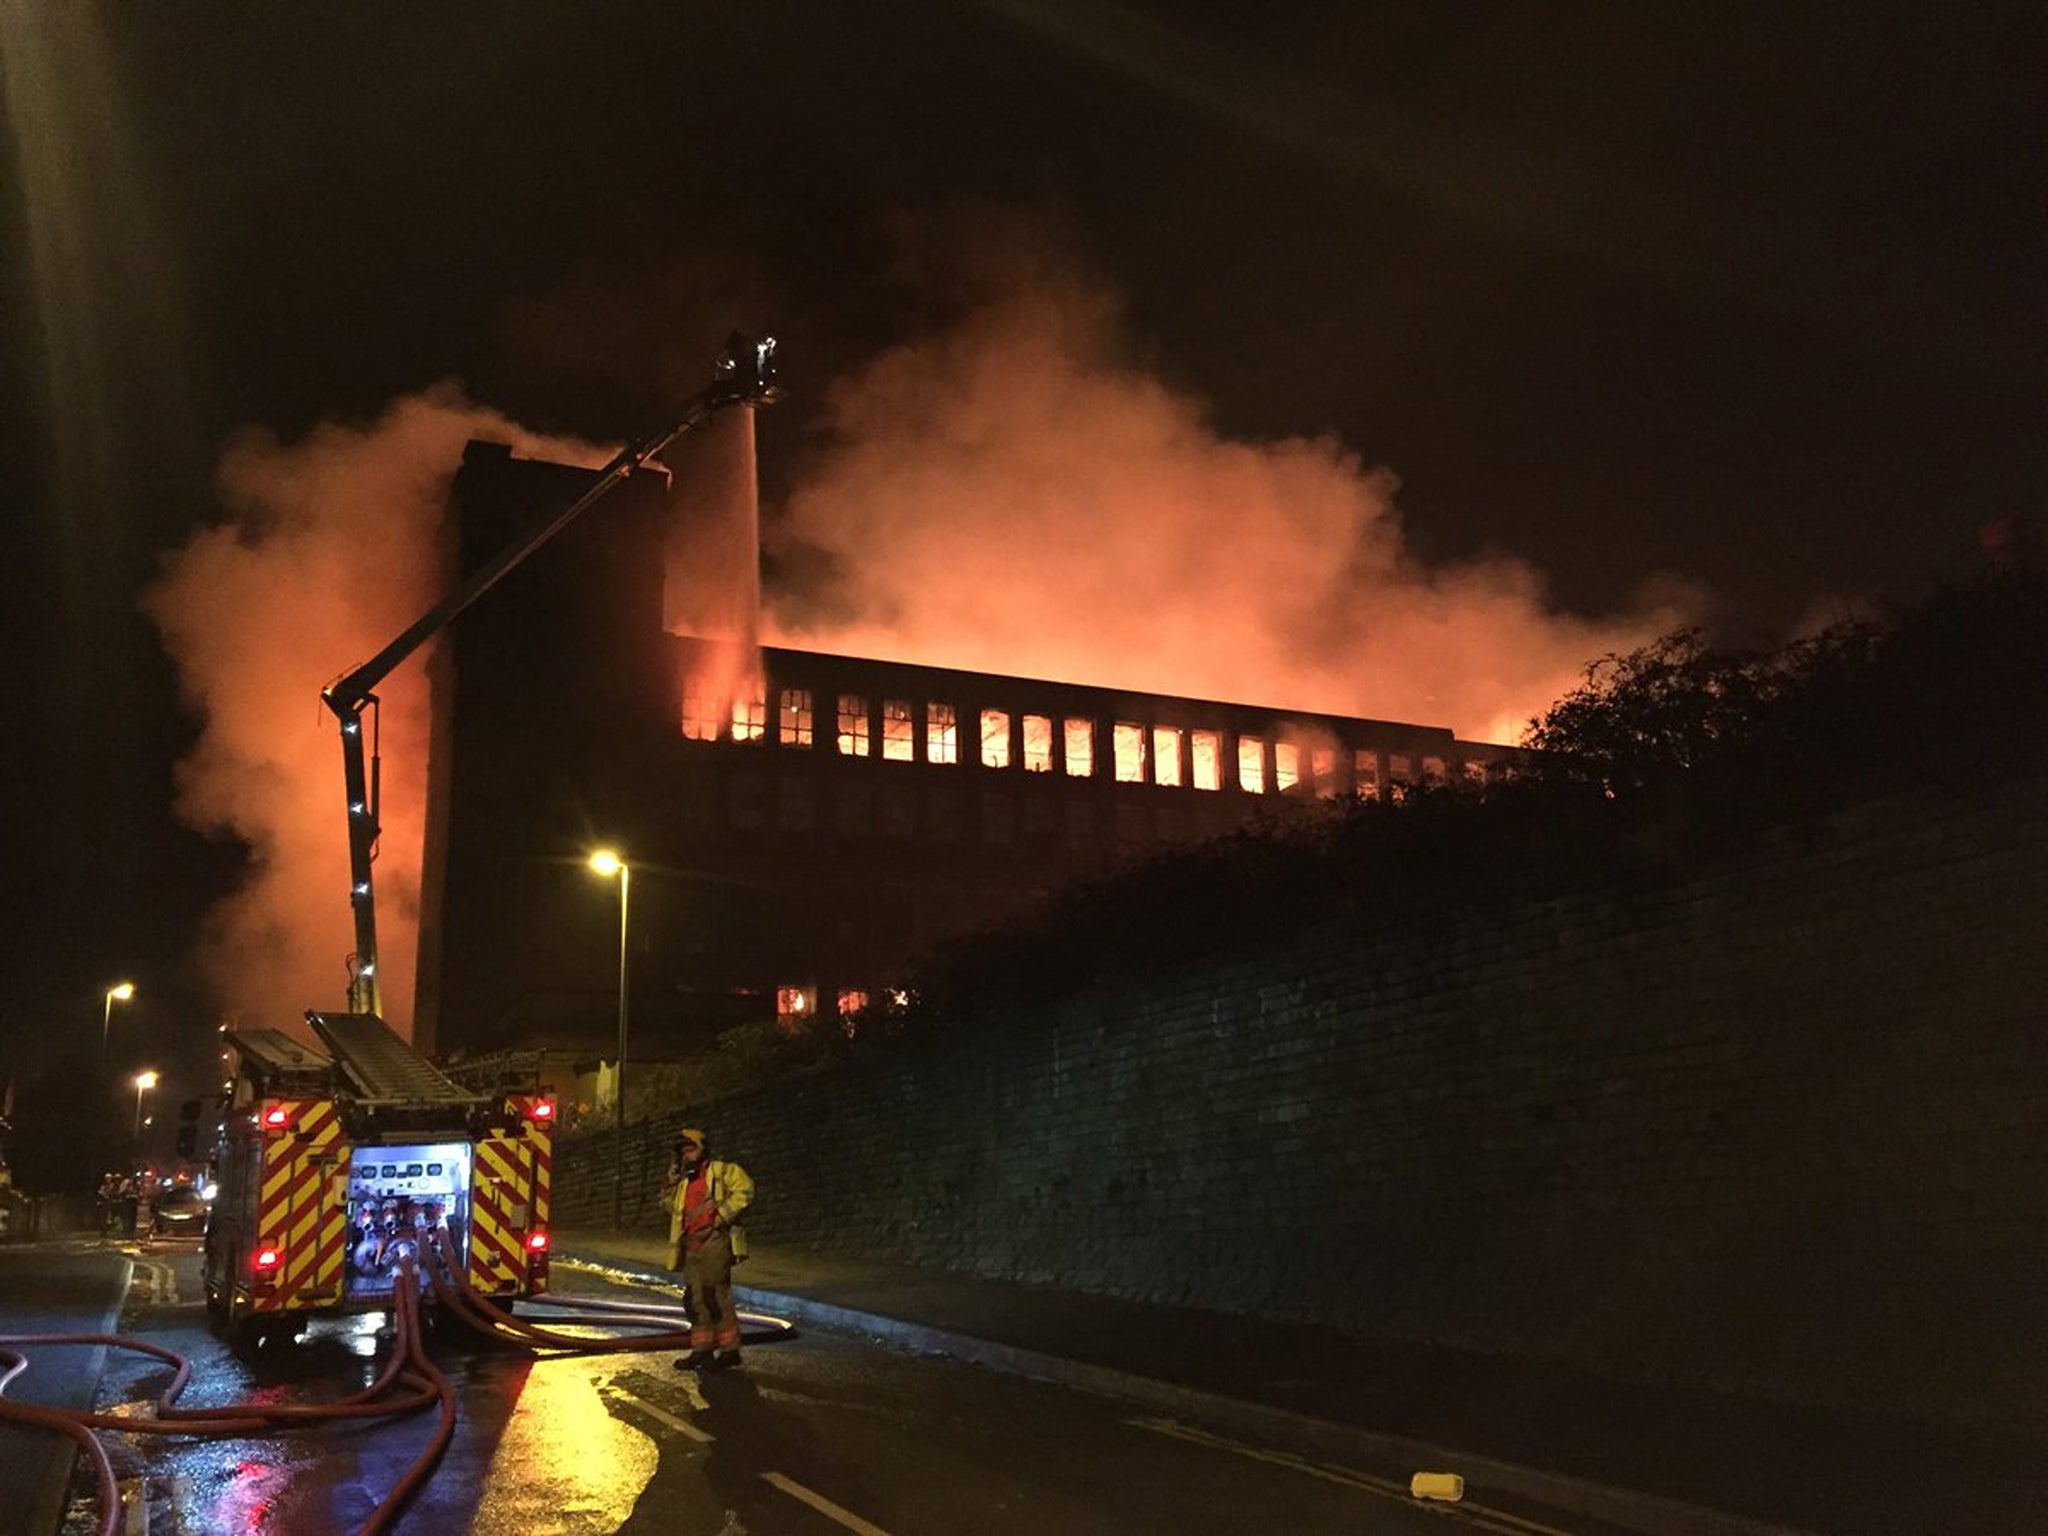 Greater Manchester firemen tackling the blaze